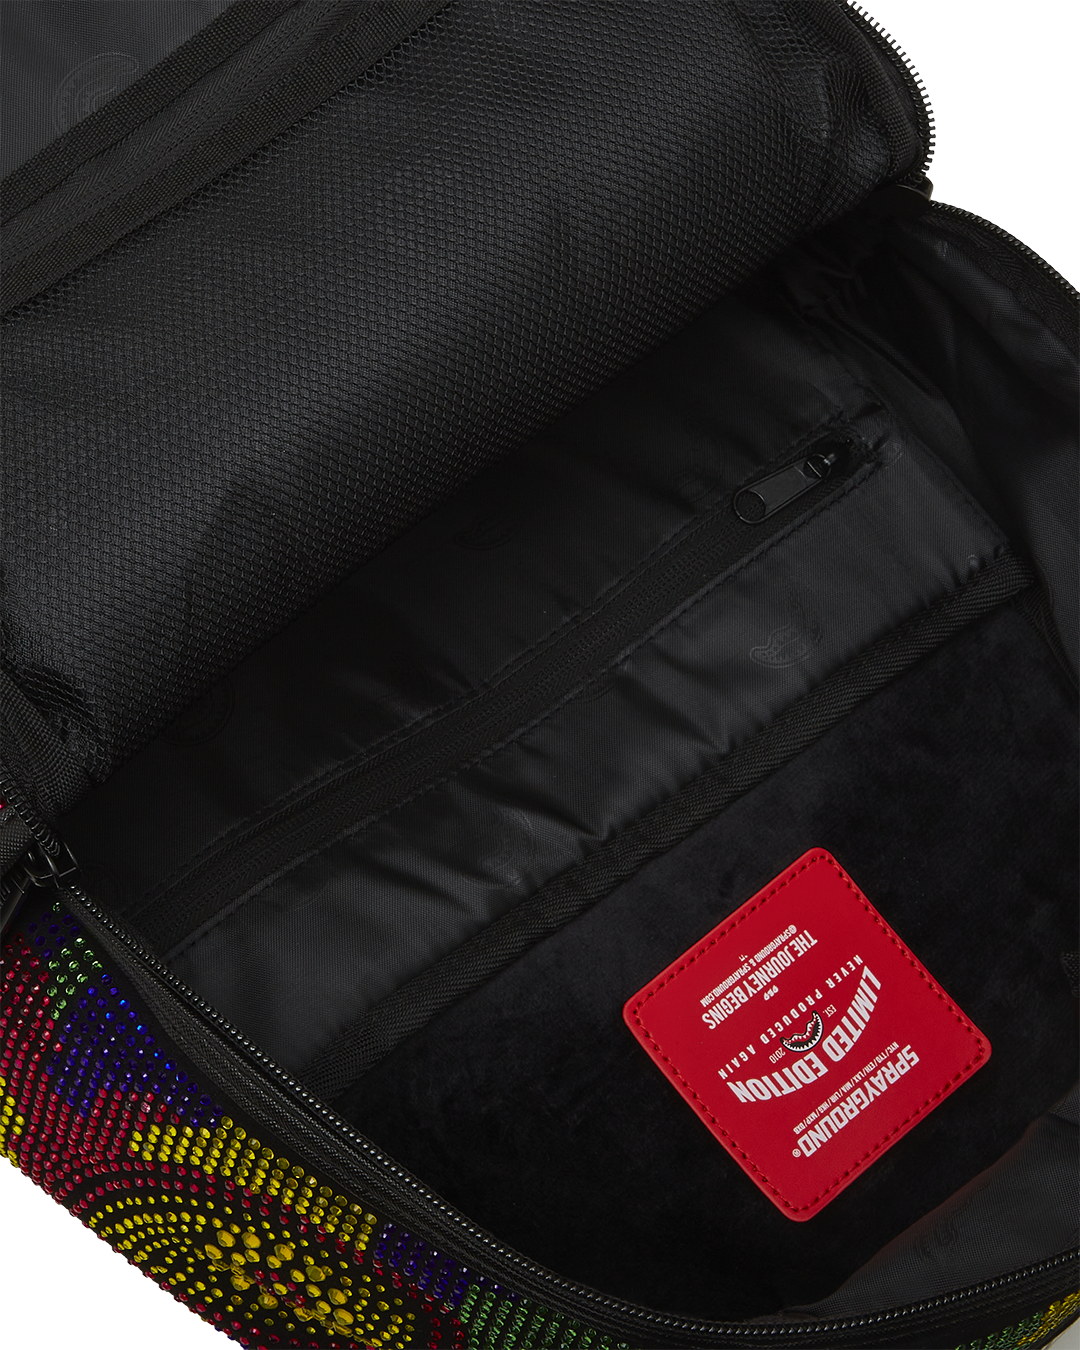 Sprayground Limited Edition Backpacks